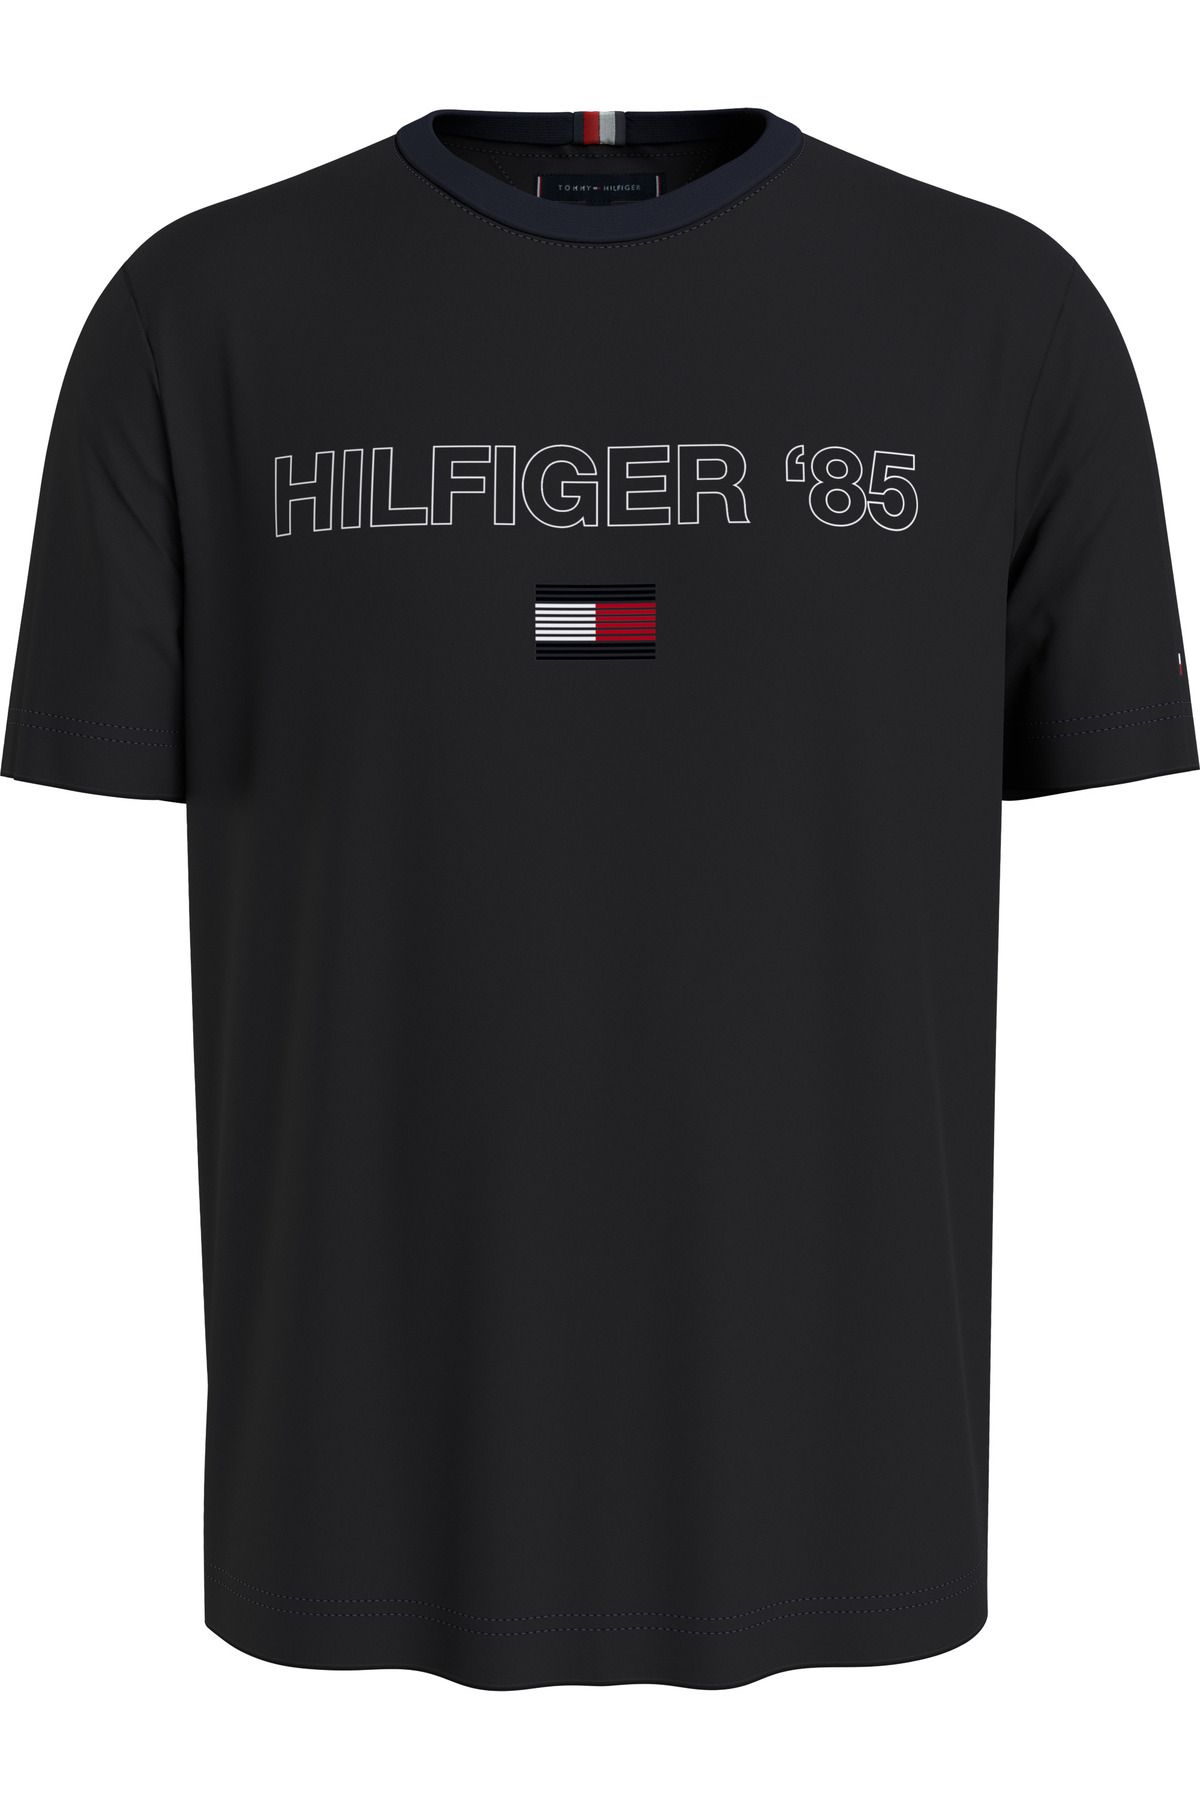 Tommy Hilfiger Erkek Marka Logolu Organik Pamuklu Bisiklet Yakalı Günlük Kullanıma Uygun Siyah T-shirt Mw0mw34427-b